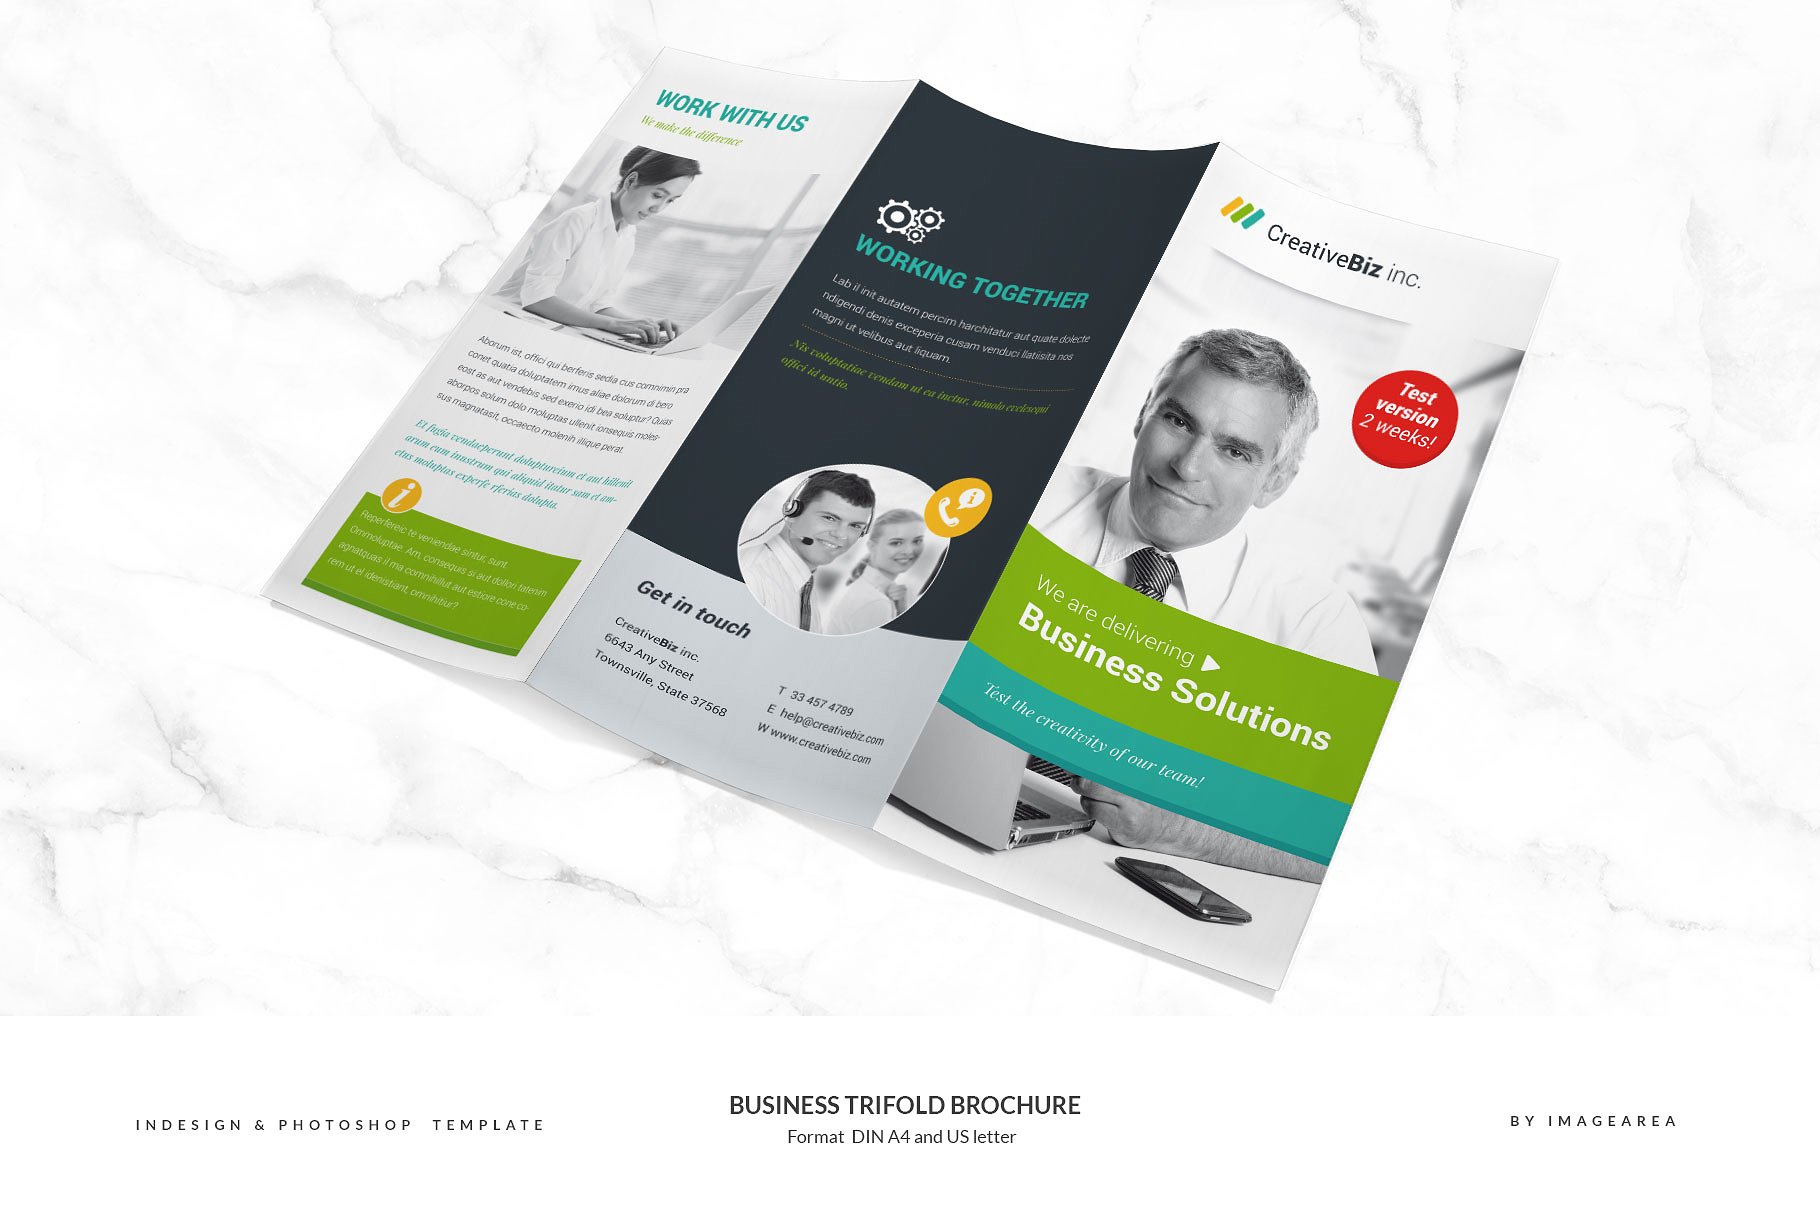 企业商务三折页宣传小册子 Business Trifold Brochure插图(2)